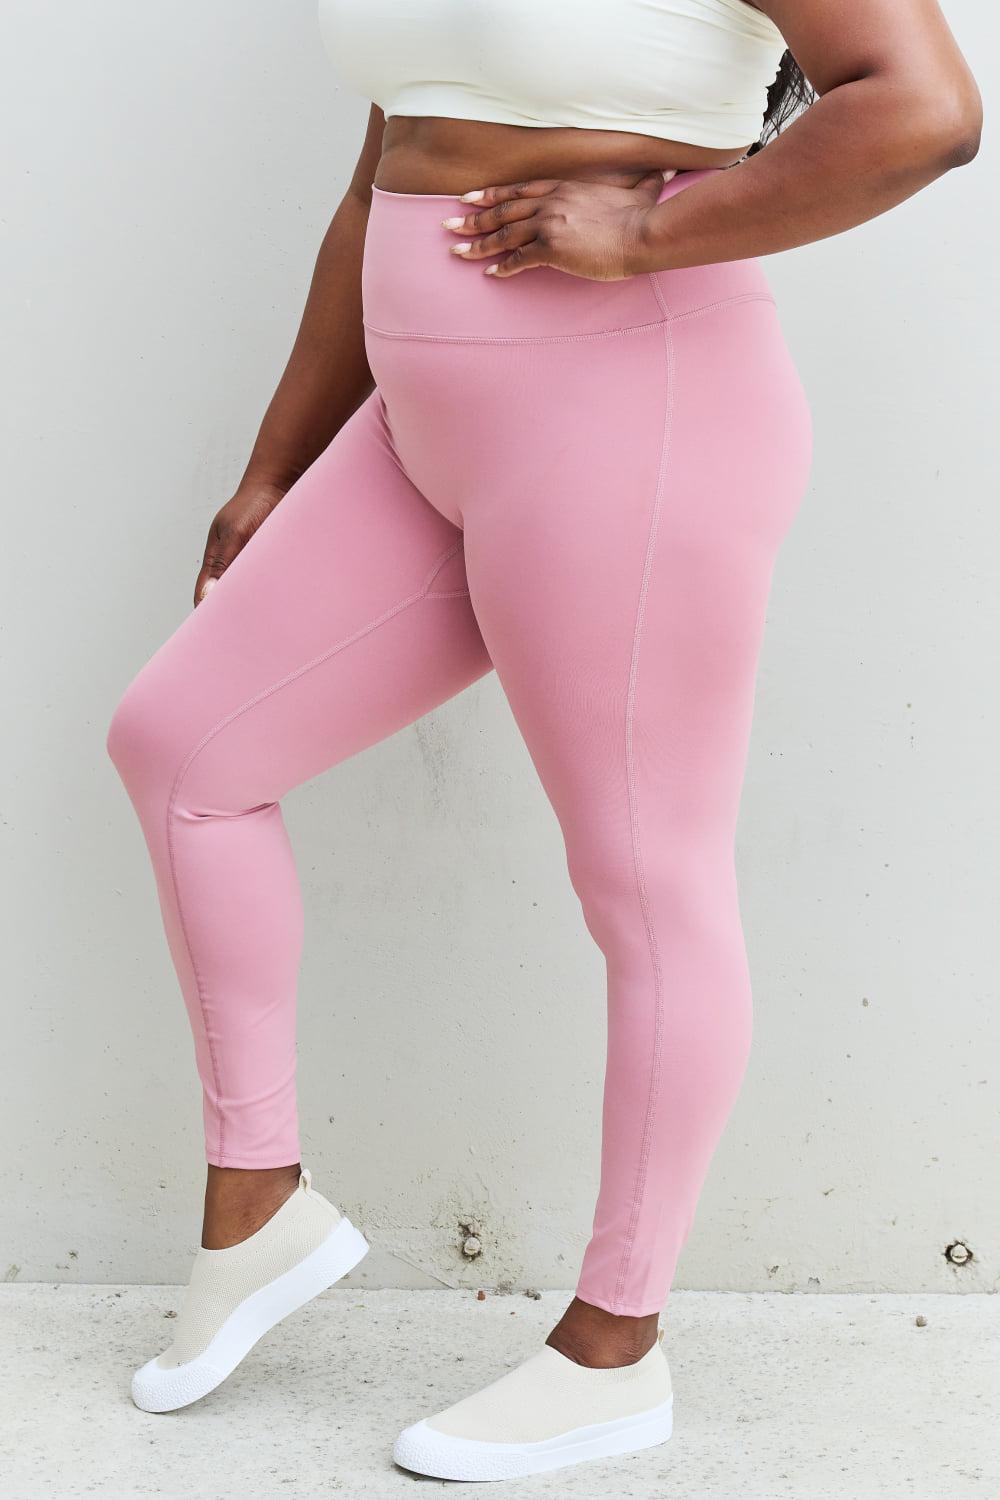 Zenana Fit For You Full Size High Waist Active Leggings in Light Rose BLUE ZONE PLANET